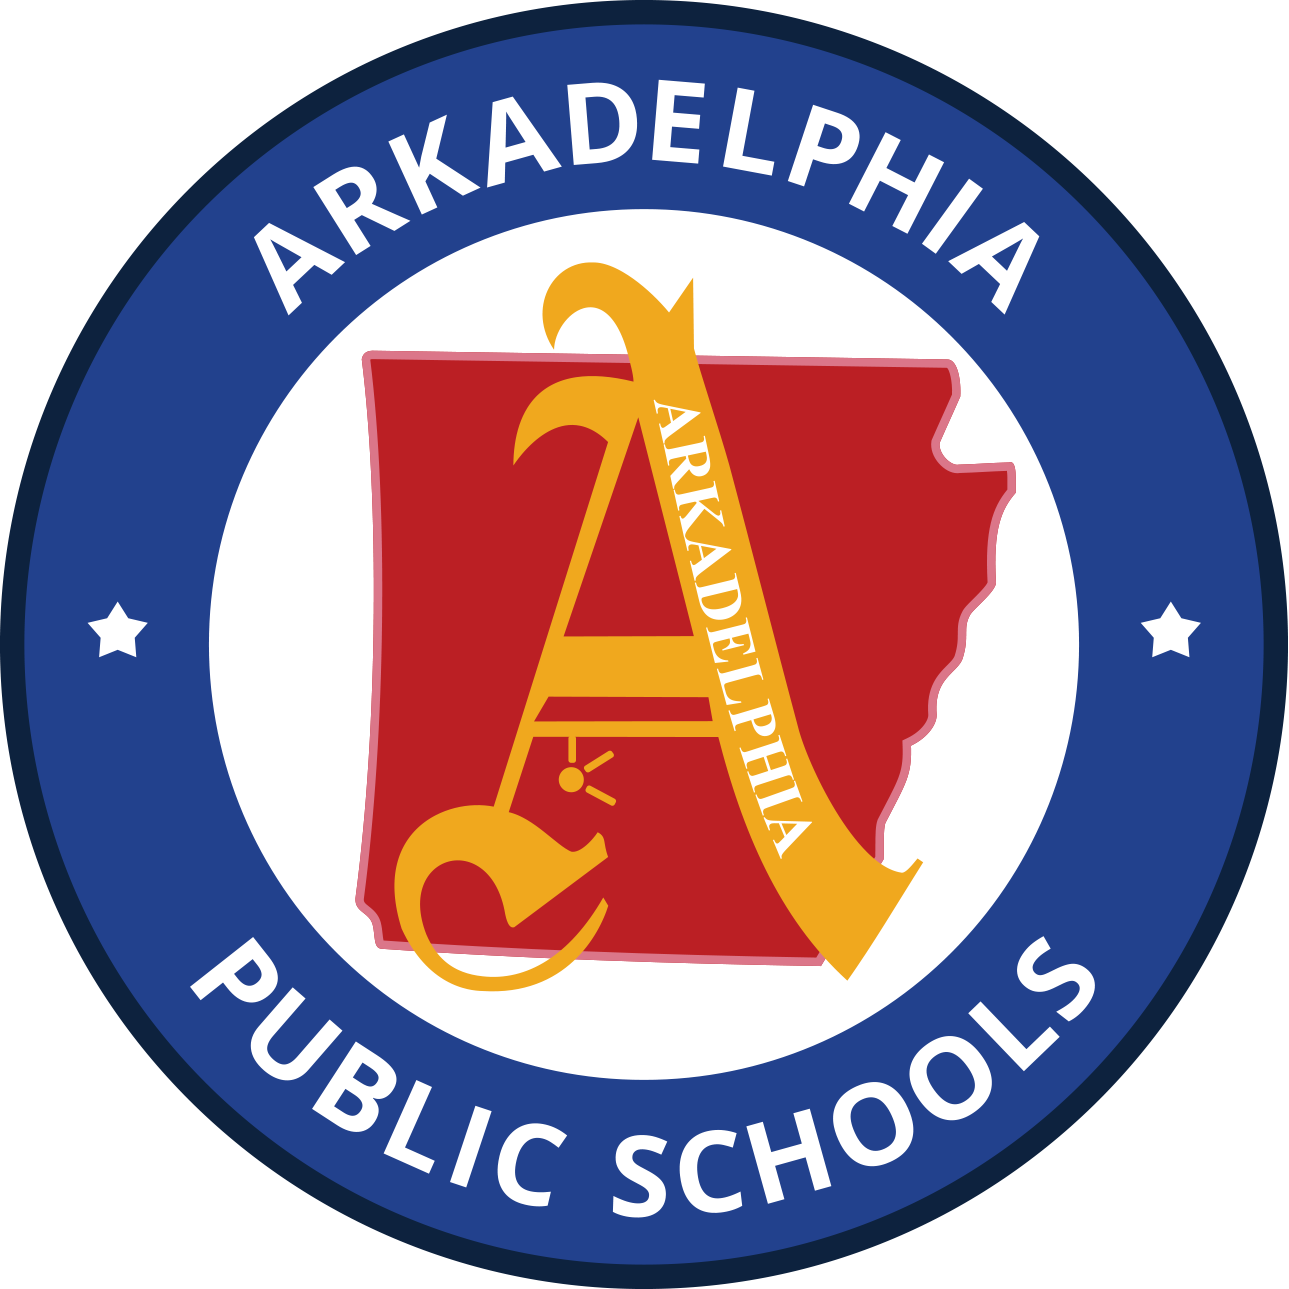 Arkadelphia Public Schools